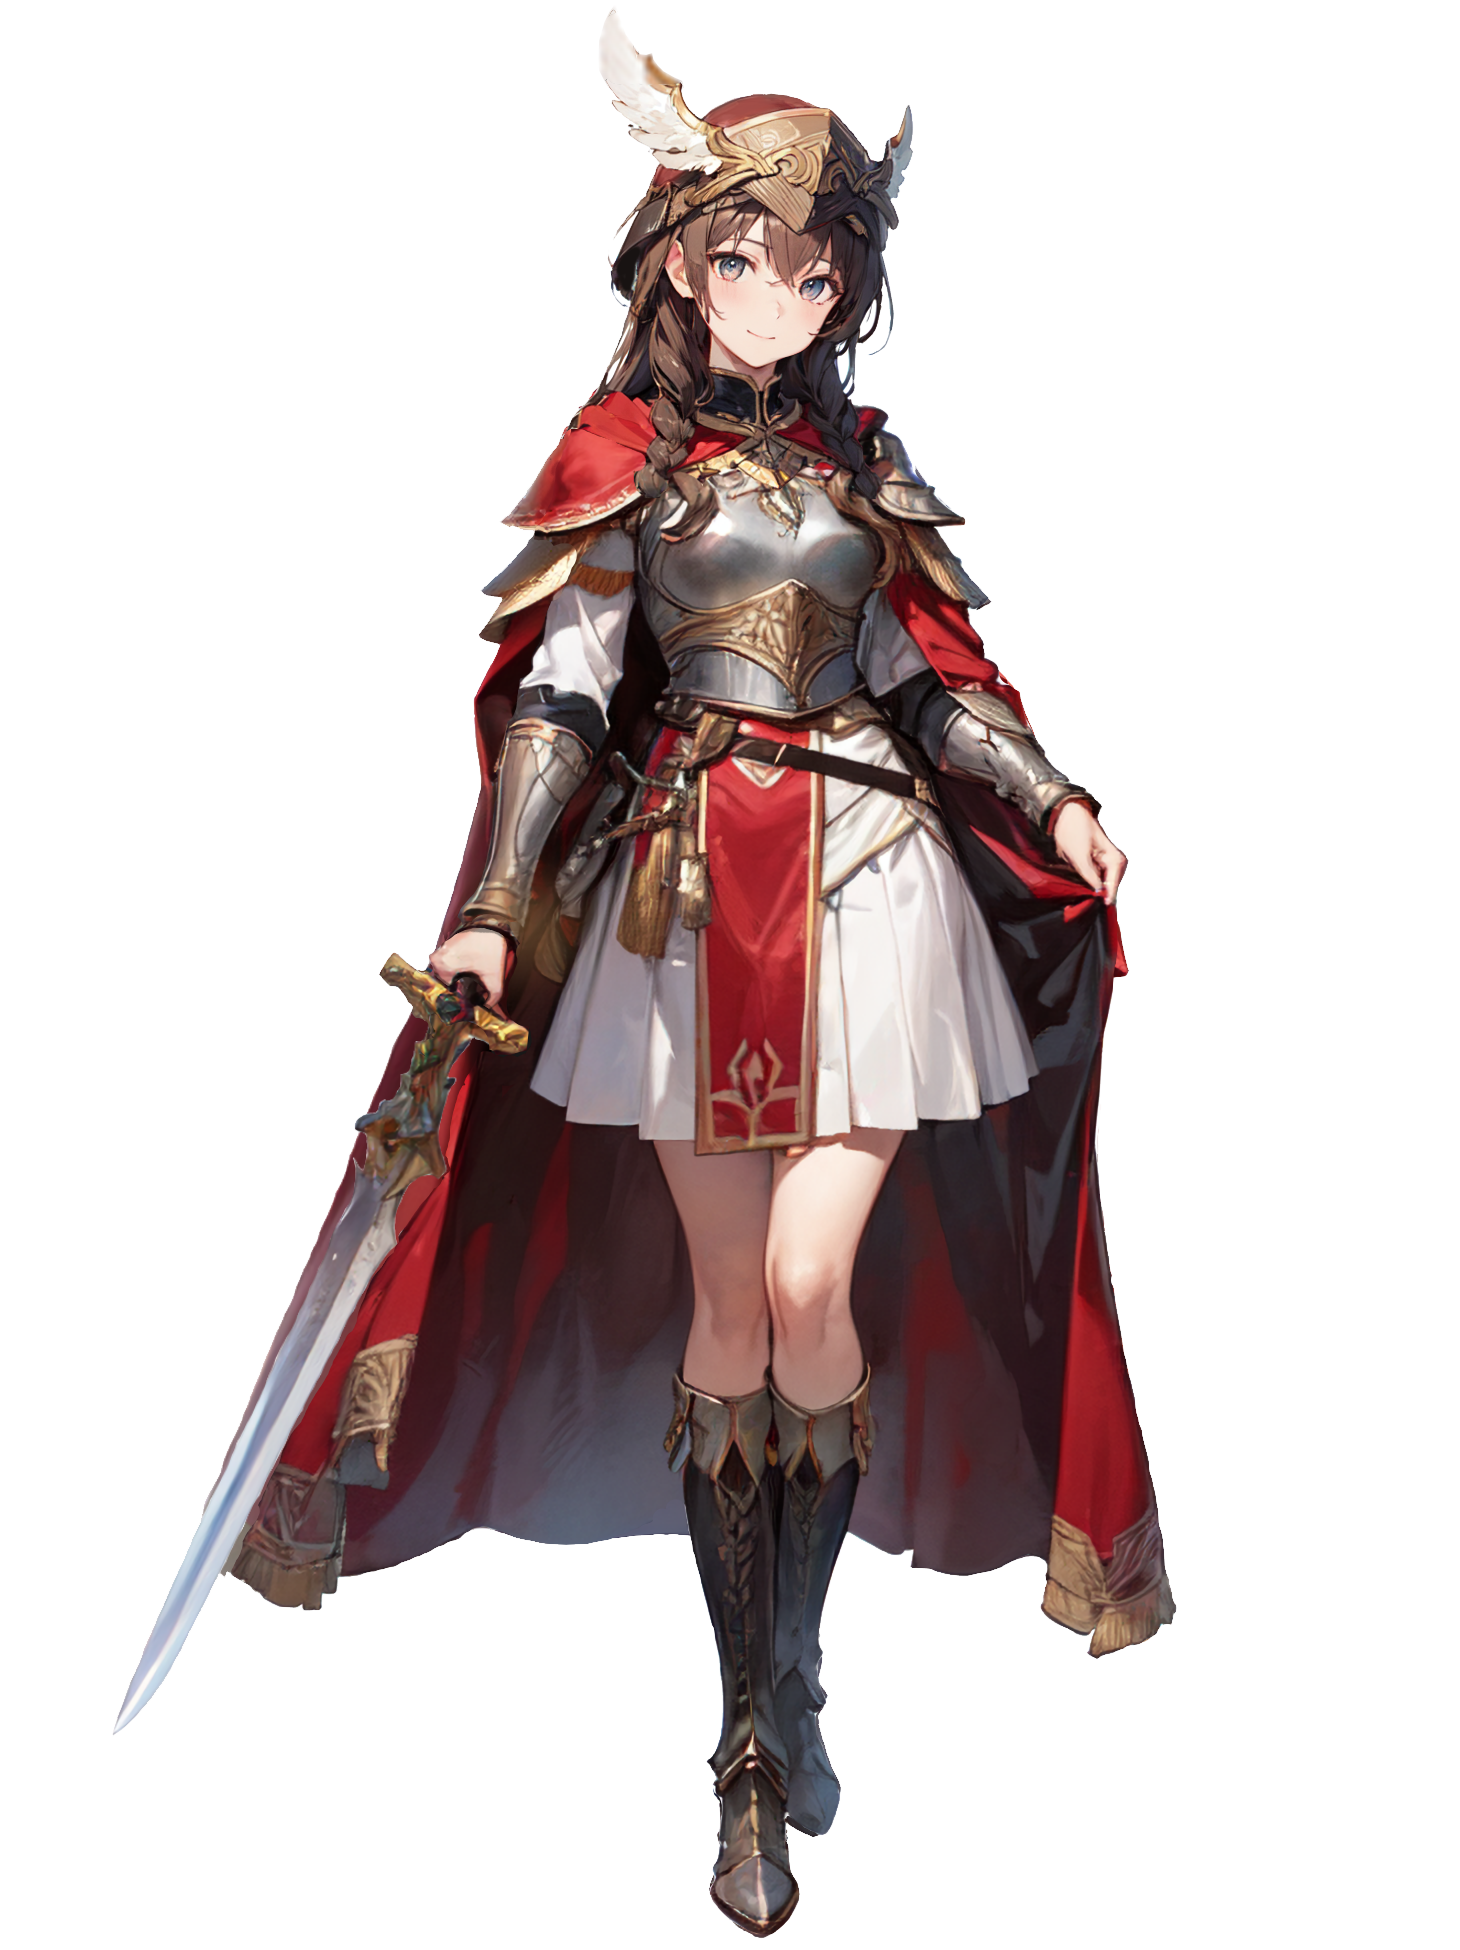 1208843 Zen Yukisuke, armor, dragon, vertical, fantasy girl, anime, sword,  anime girls, knight - Rare Gallery HD Wallpapers